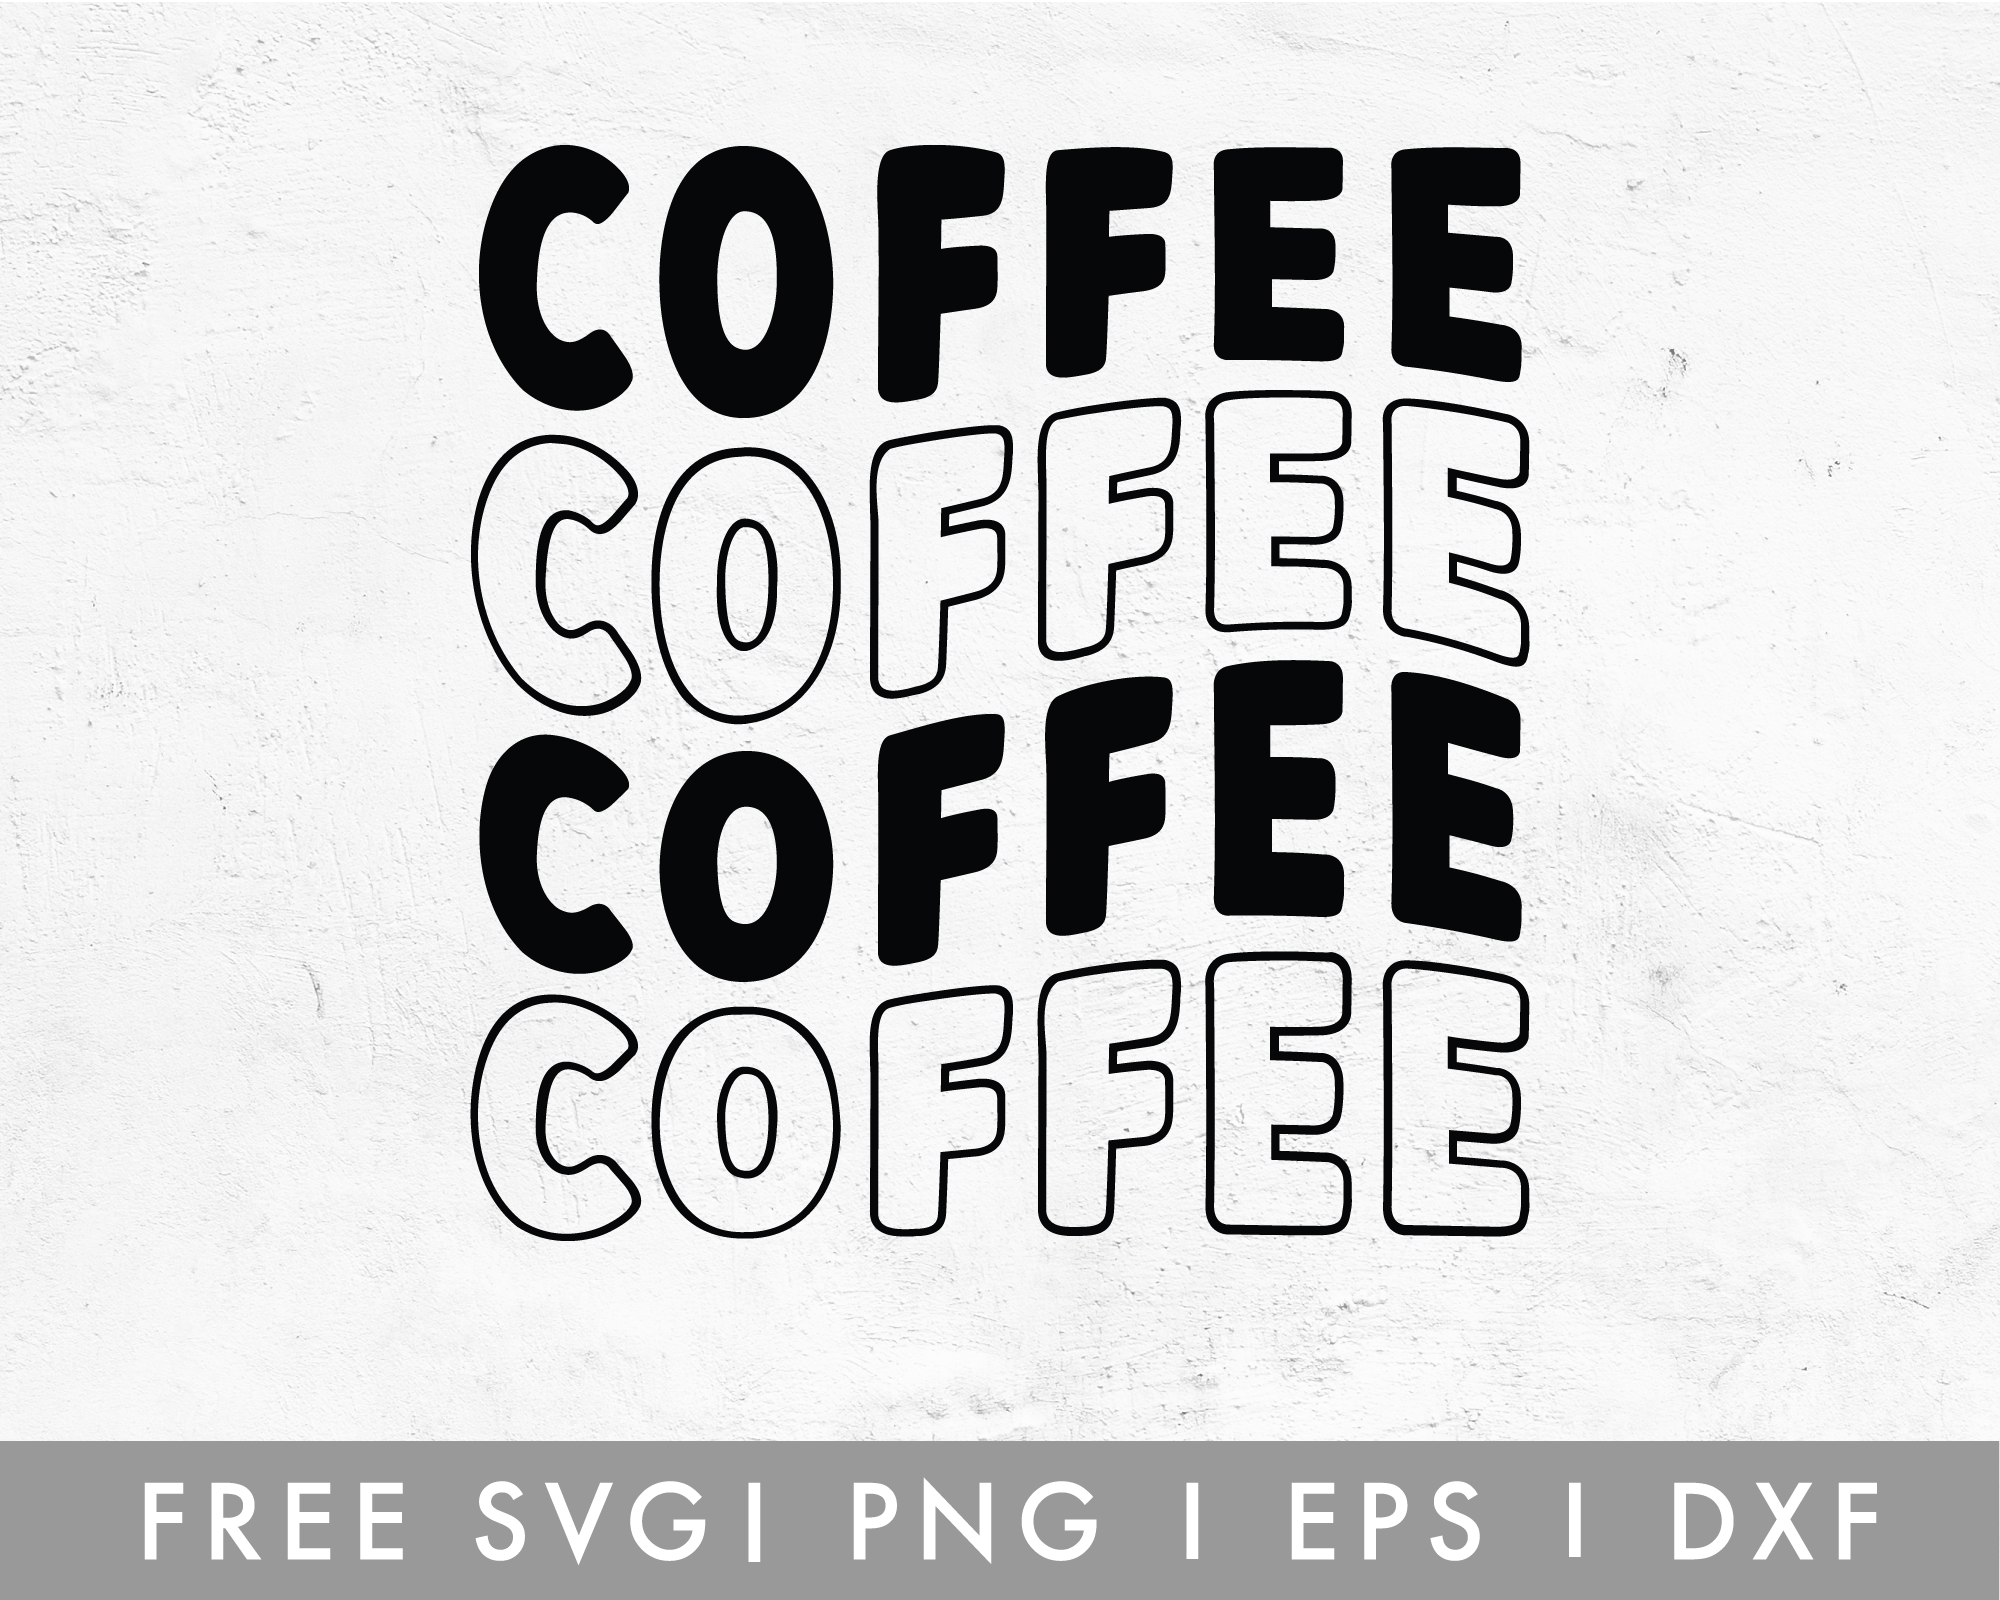 Free SVG files - Free SVG files